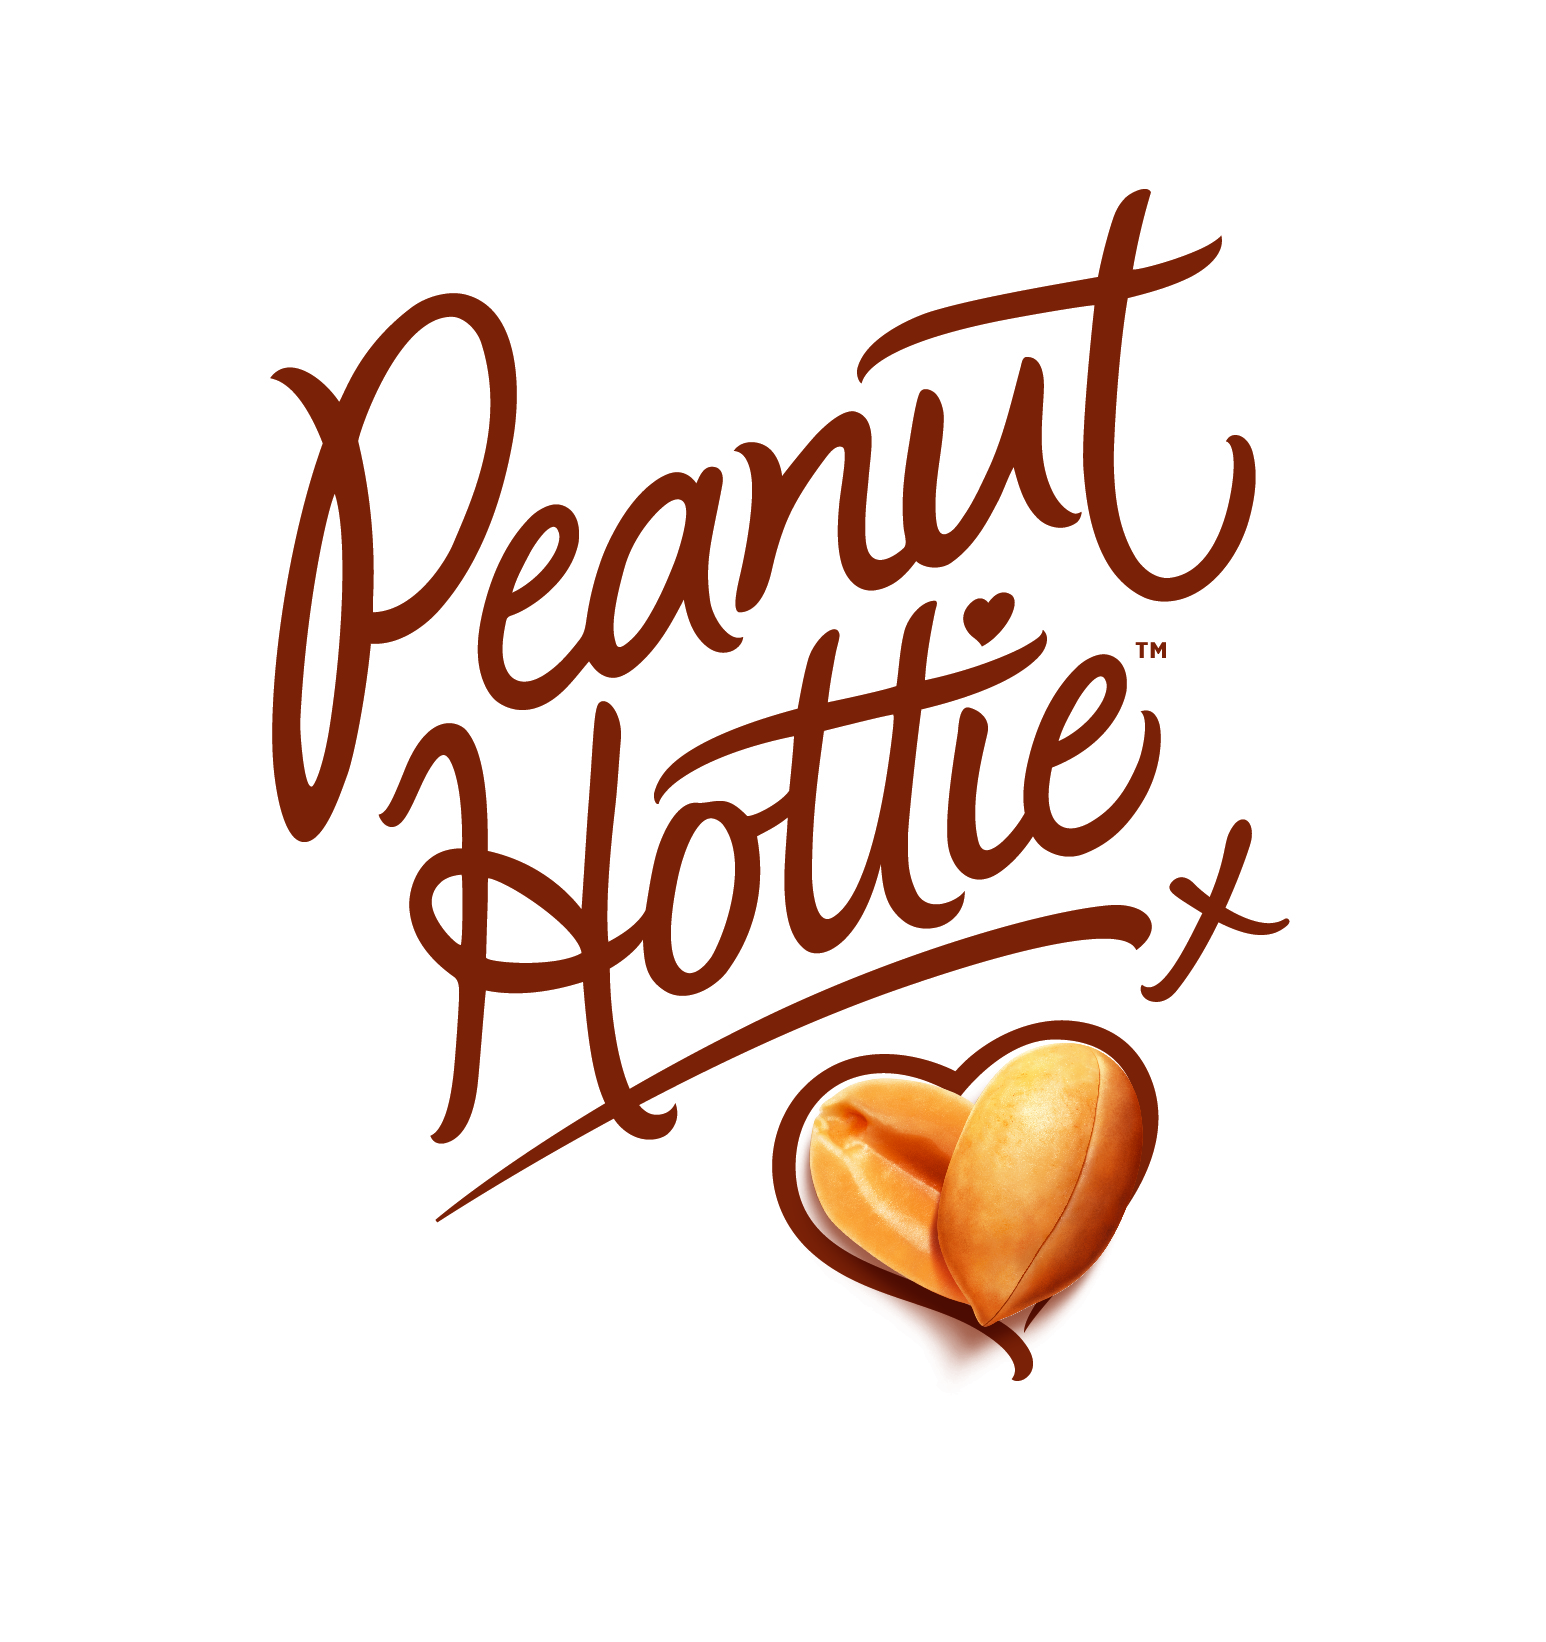 Peanut Hottie logo